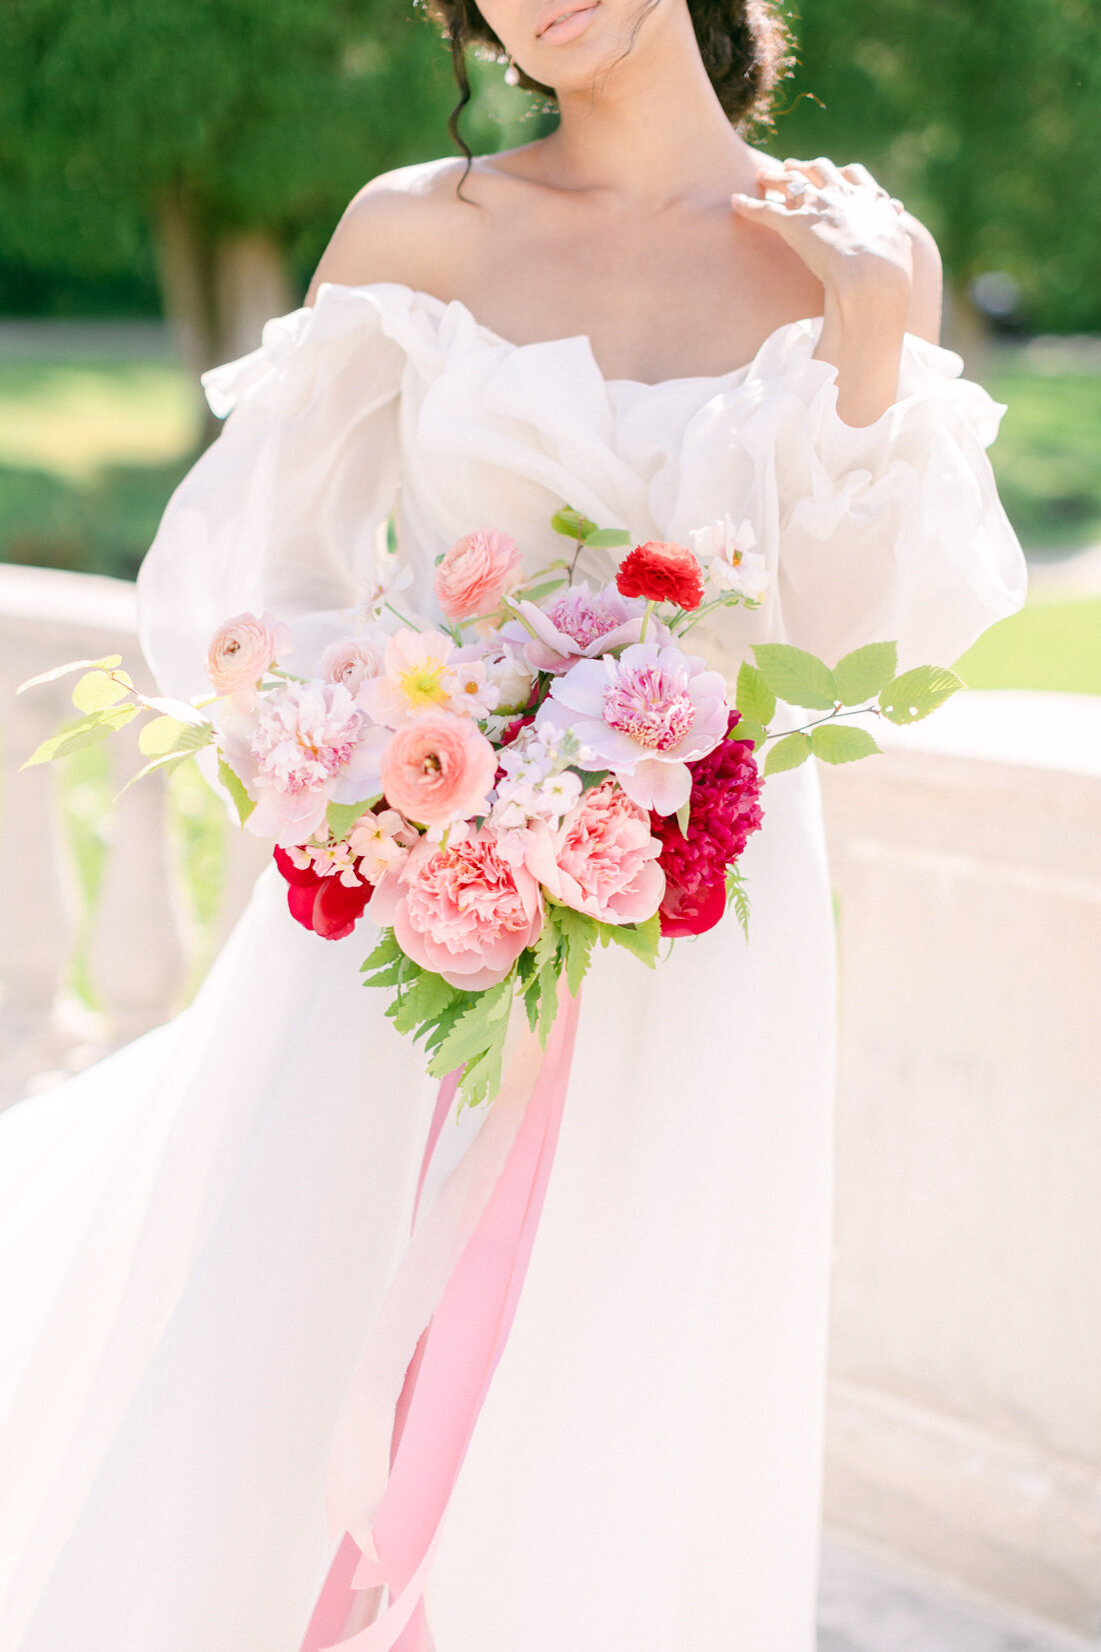 Atelier-Carmel-Wedding-Florist-GALLERY-Bridal-24